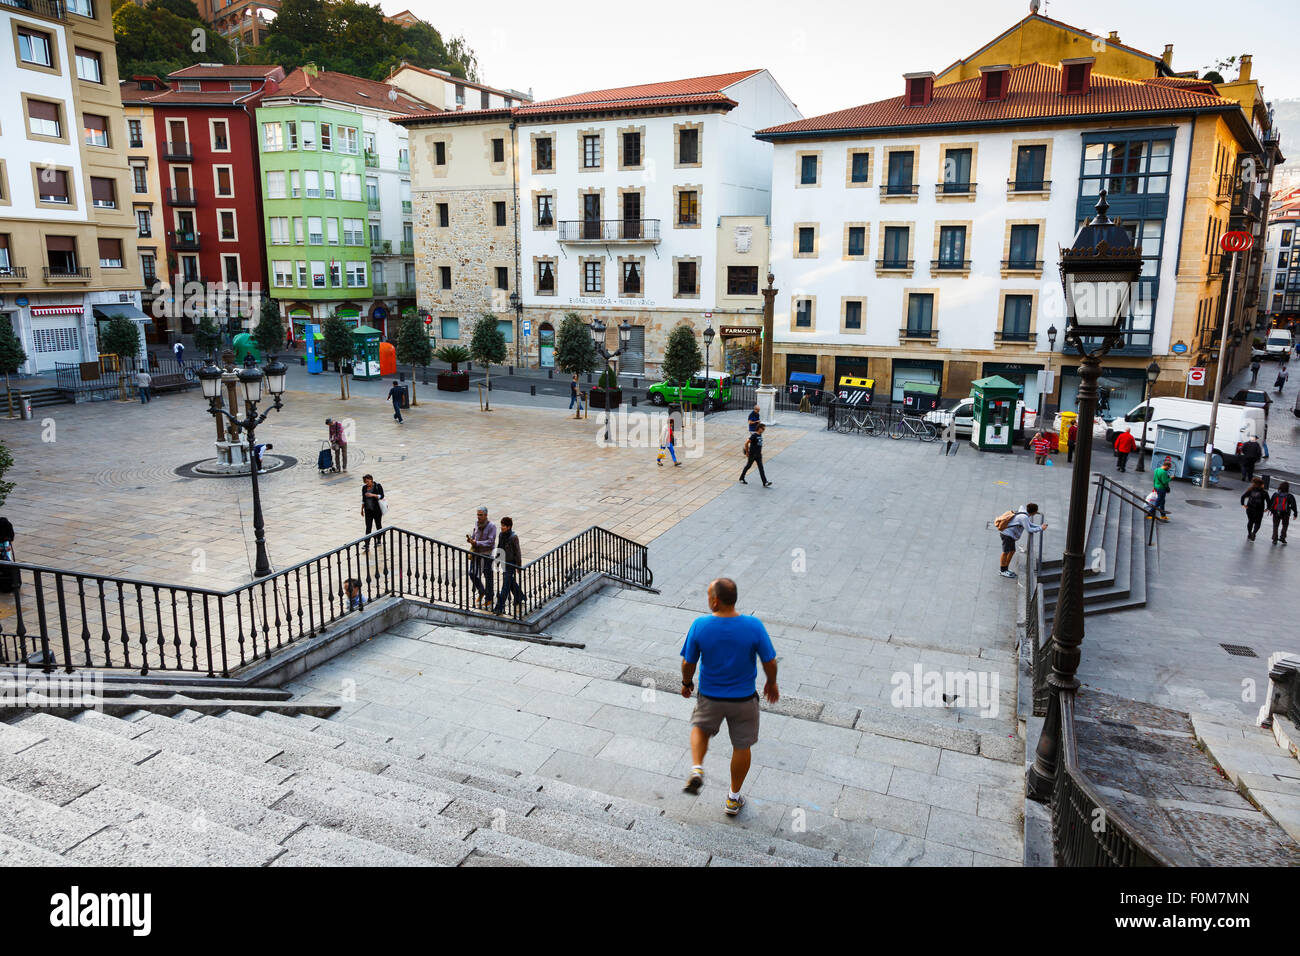 Unamuno Square. Bilbao, Biscaye, Espagne, Europe. Banque D'Images